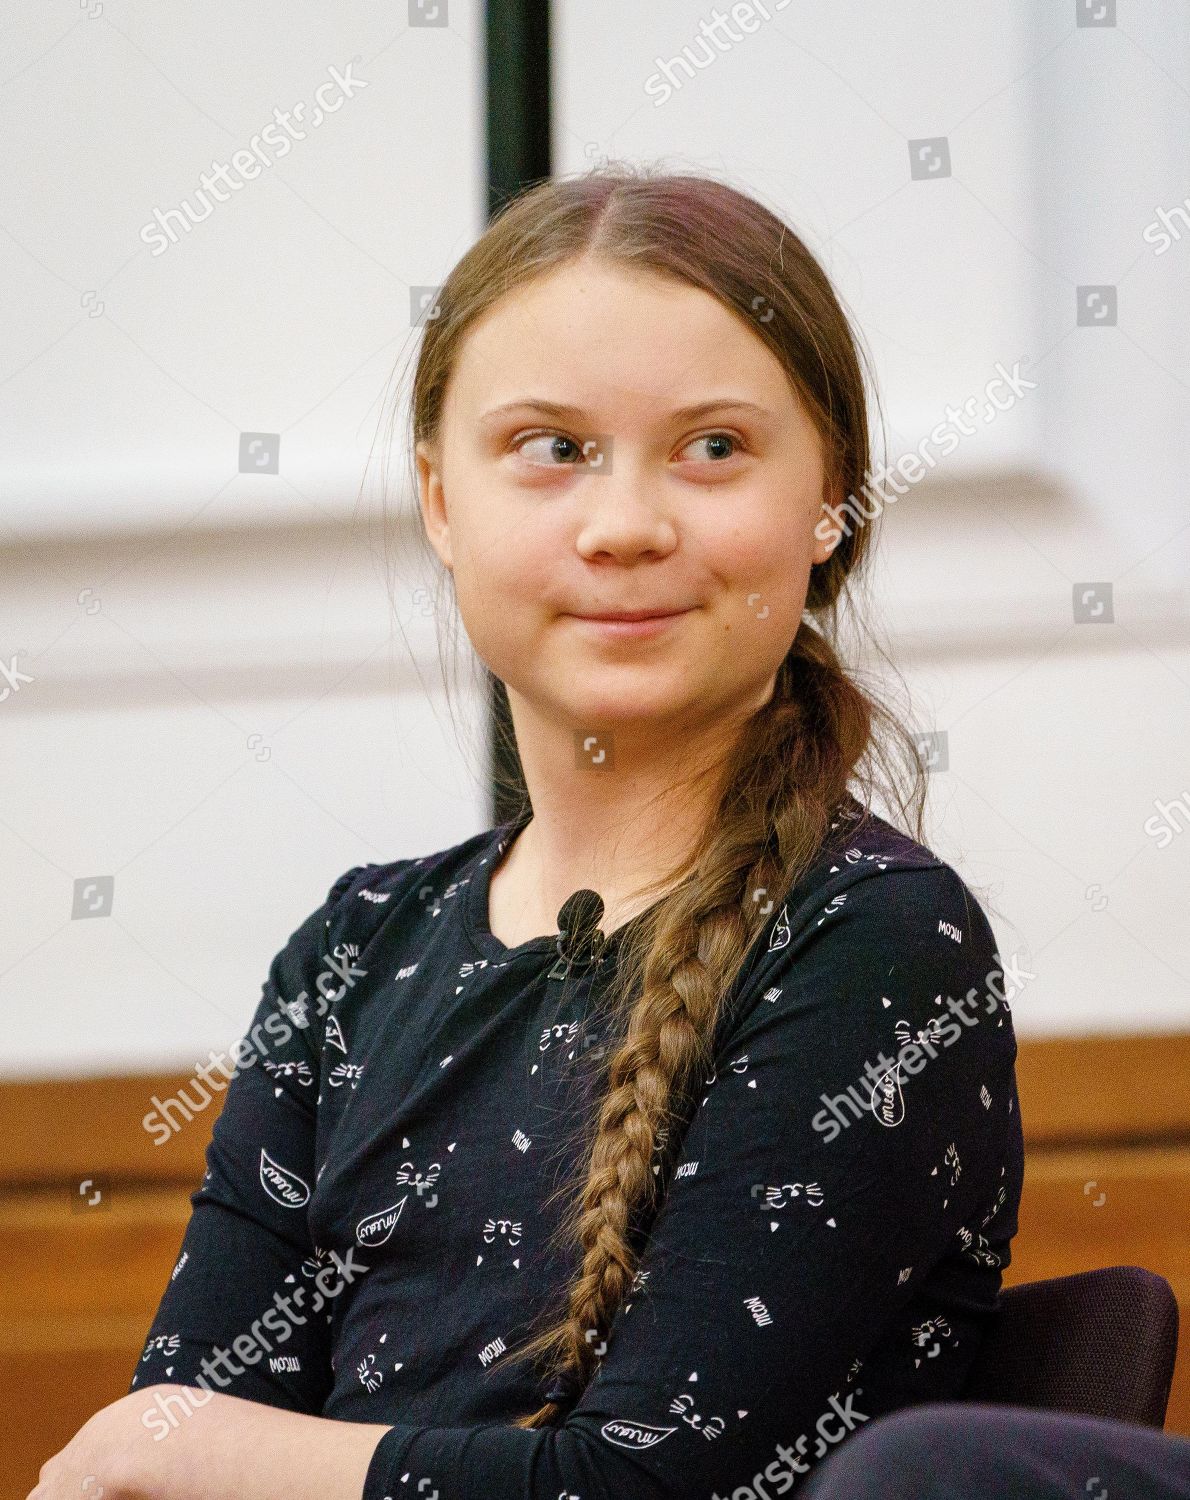 Swedish schoolgirl climate activist Greta Thunberg speaks Editorial Stock Photo ...1190 x 1500